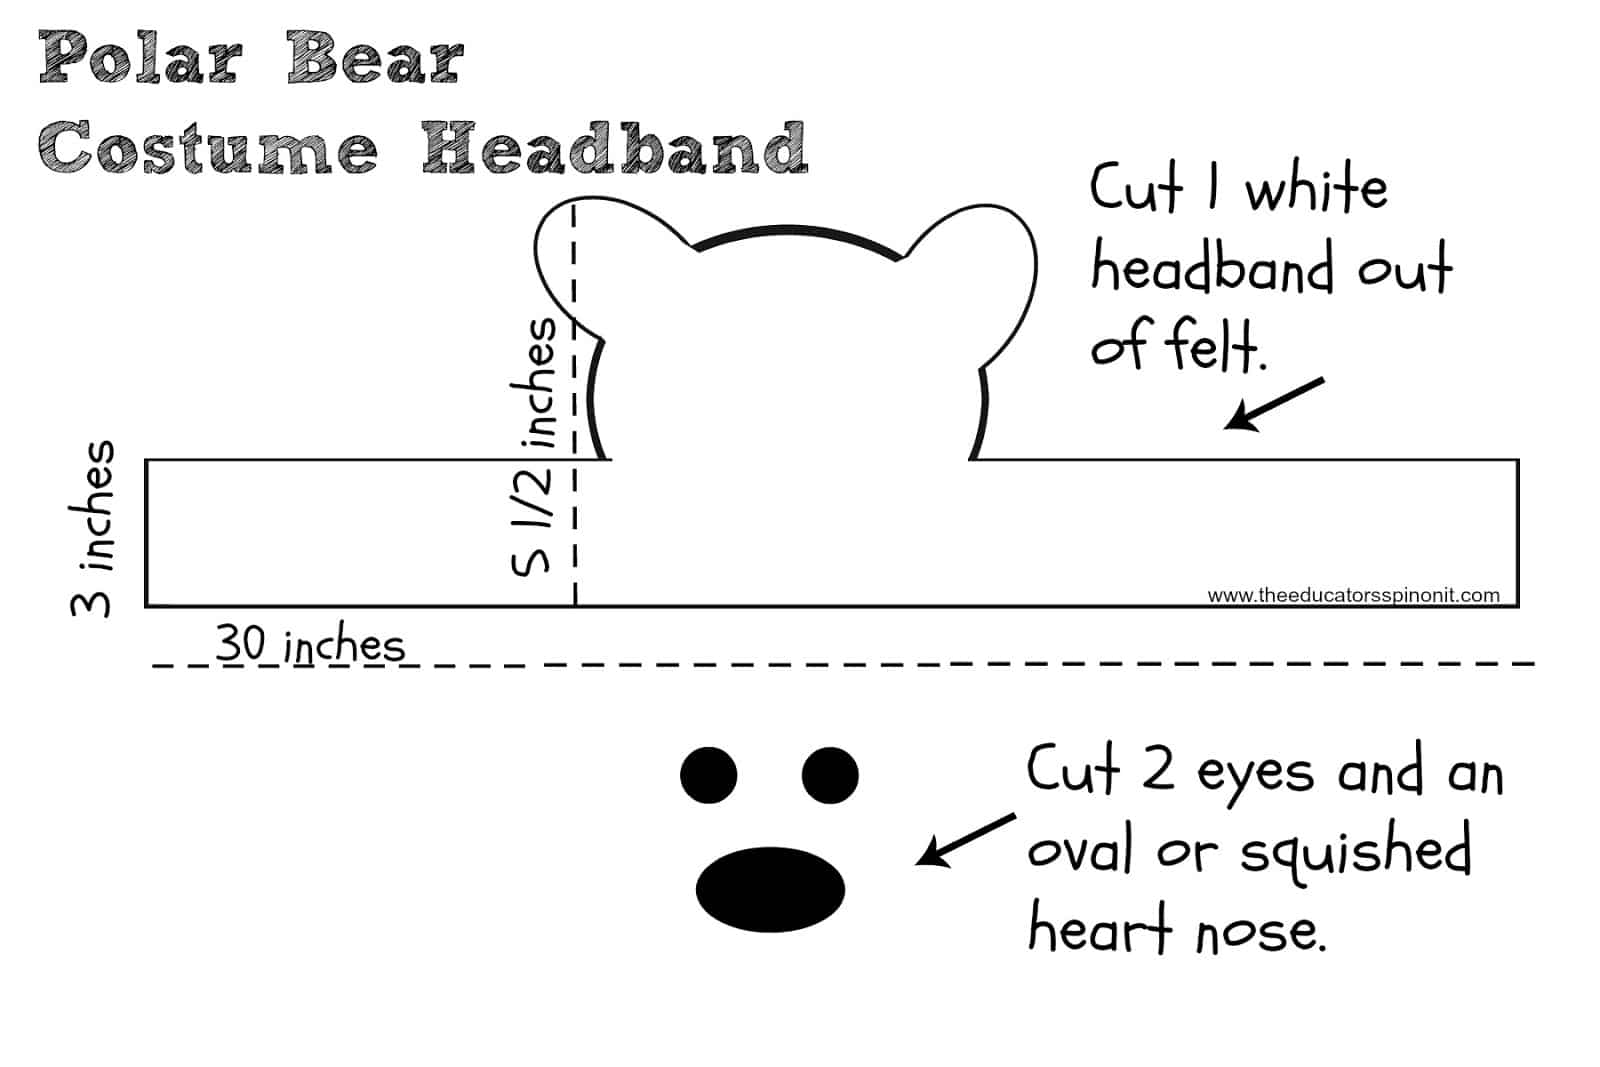 polar-bear-costume-headband-for-kids-the-educators-spin-on-it